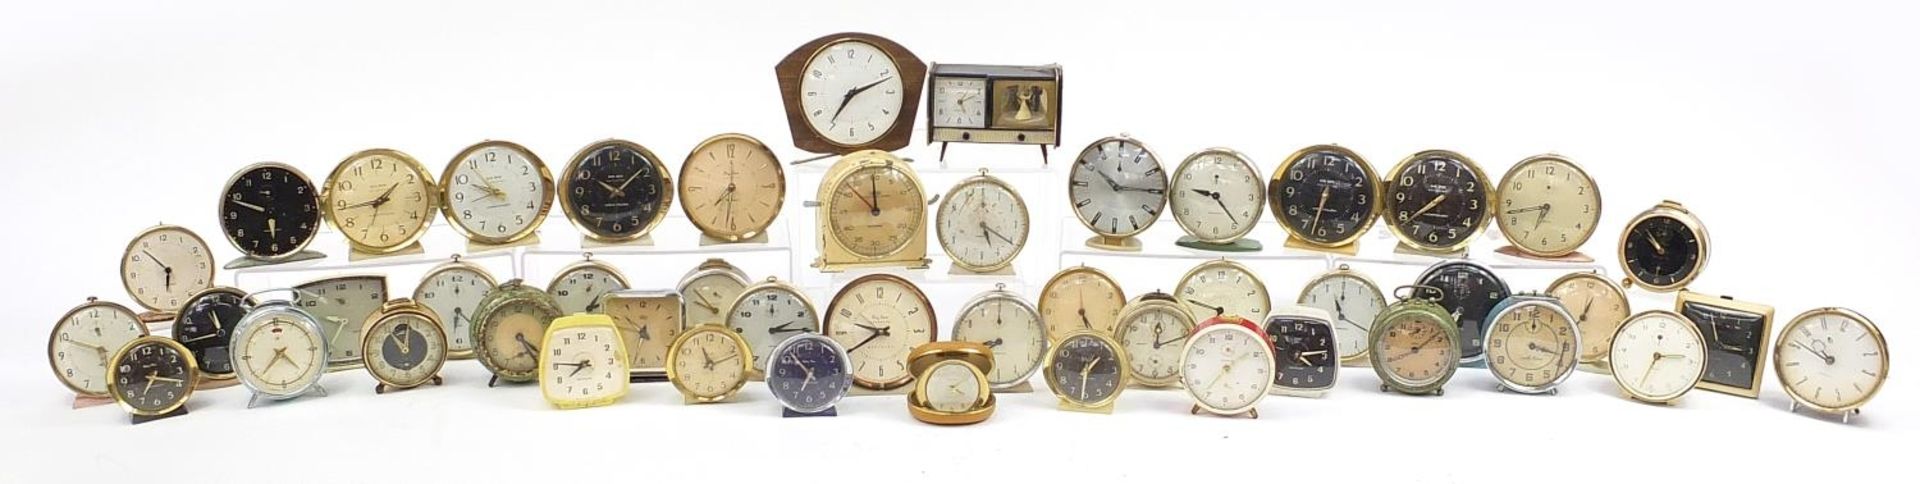 Collection of vintage alarm clocks including Junghans Kienzle, Westclox Big Ben Repeater, Smith